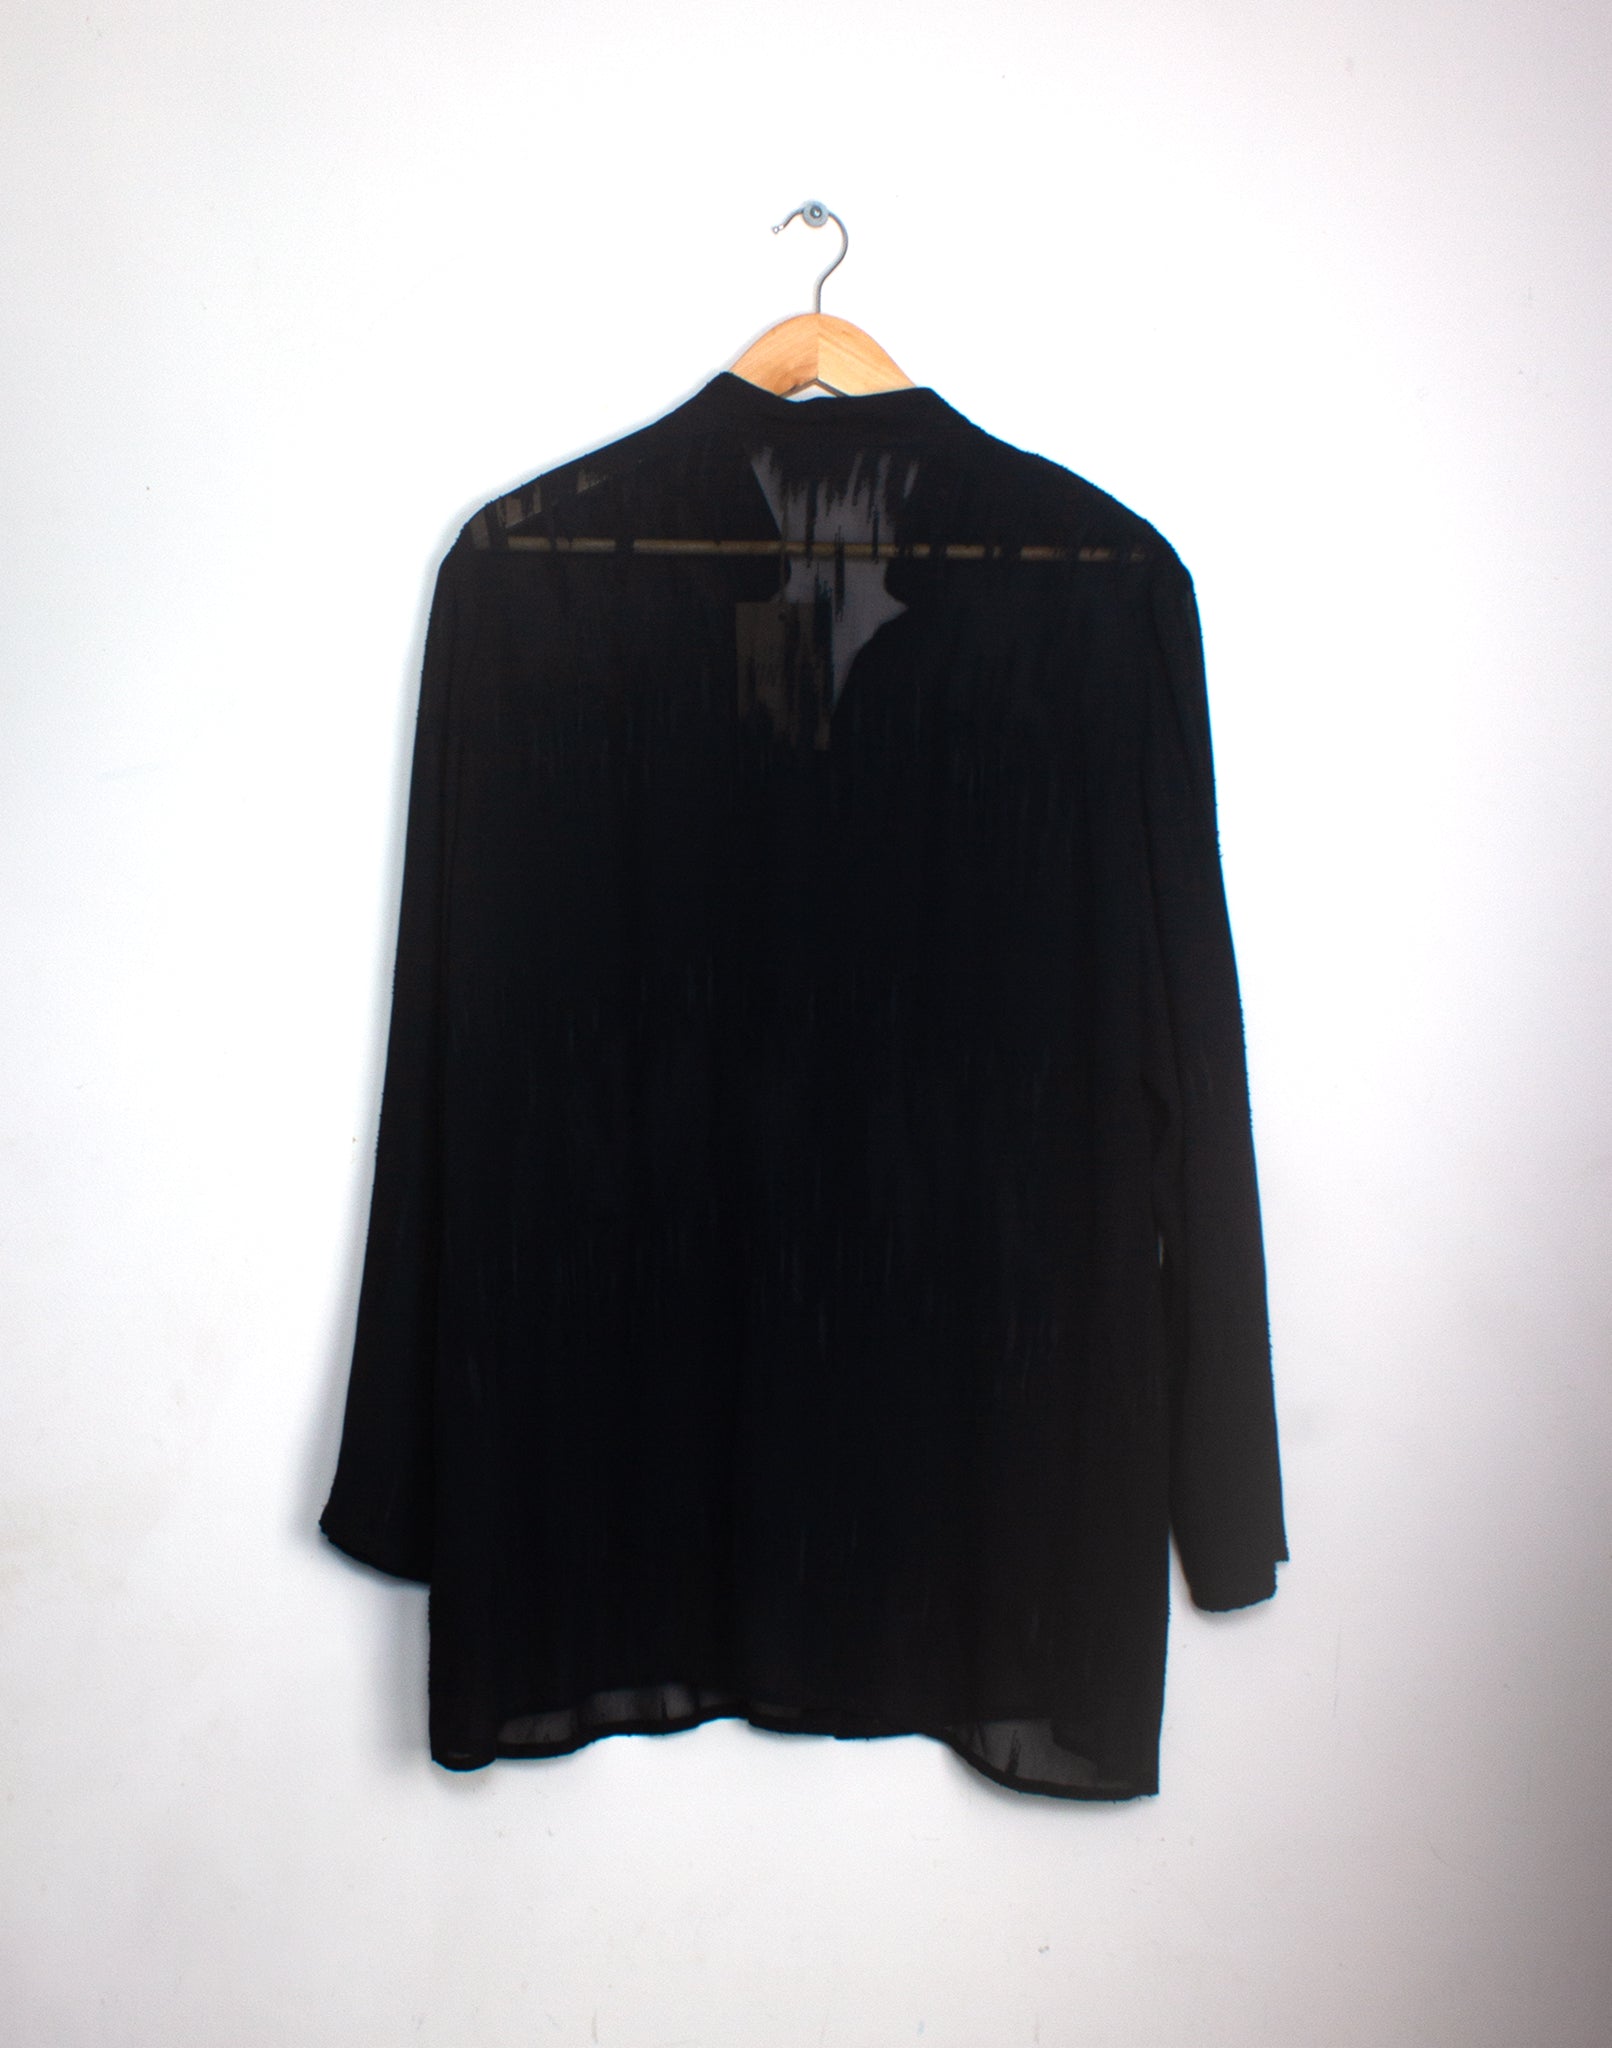 Vintage 90's Mela Purdie Black Chiffon Shirt - Size S / M